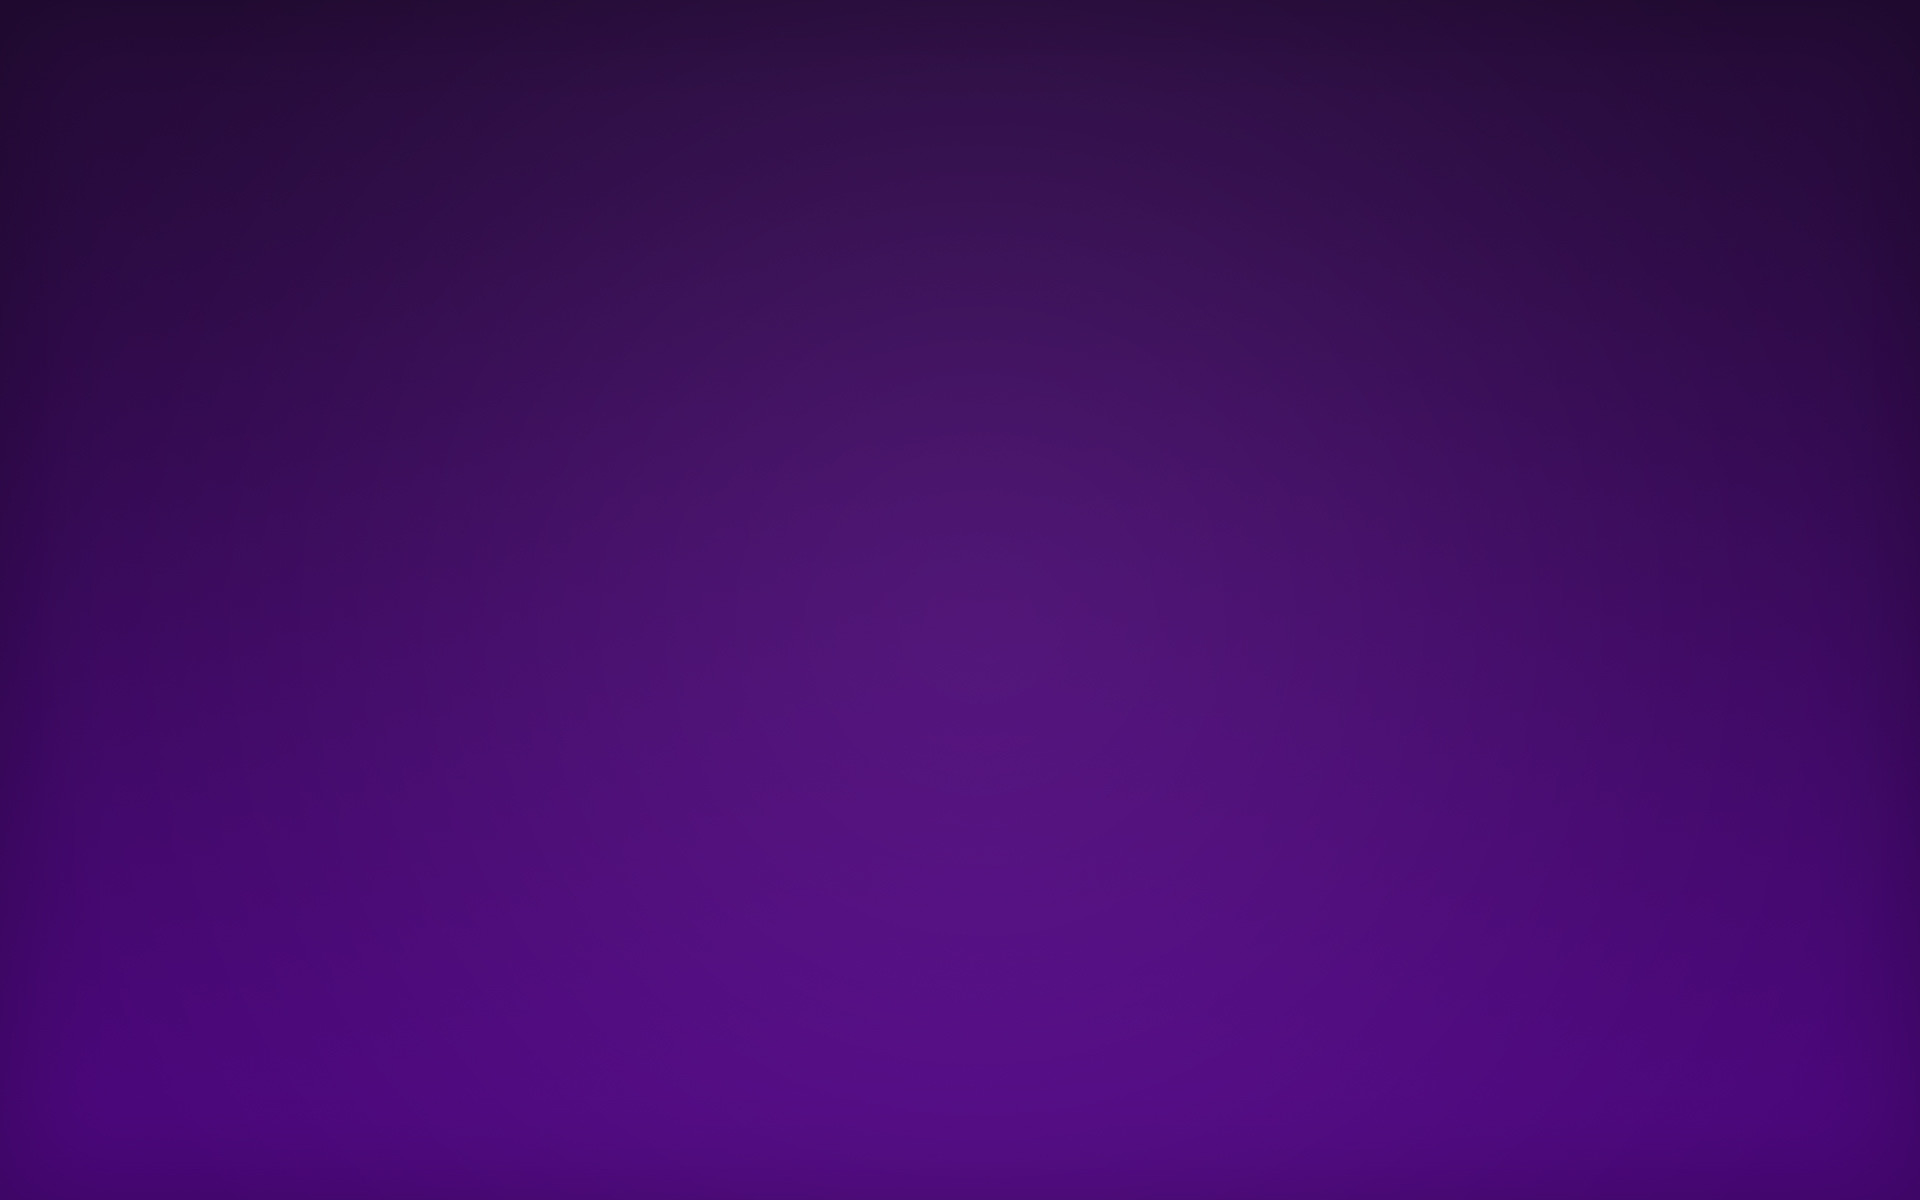 1920x1200 Purple And Black Background - WallpaperSafari ...